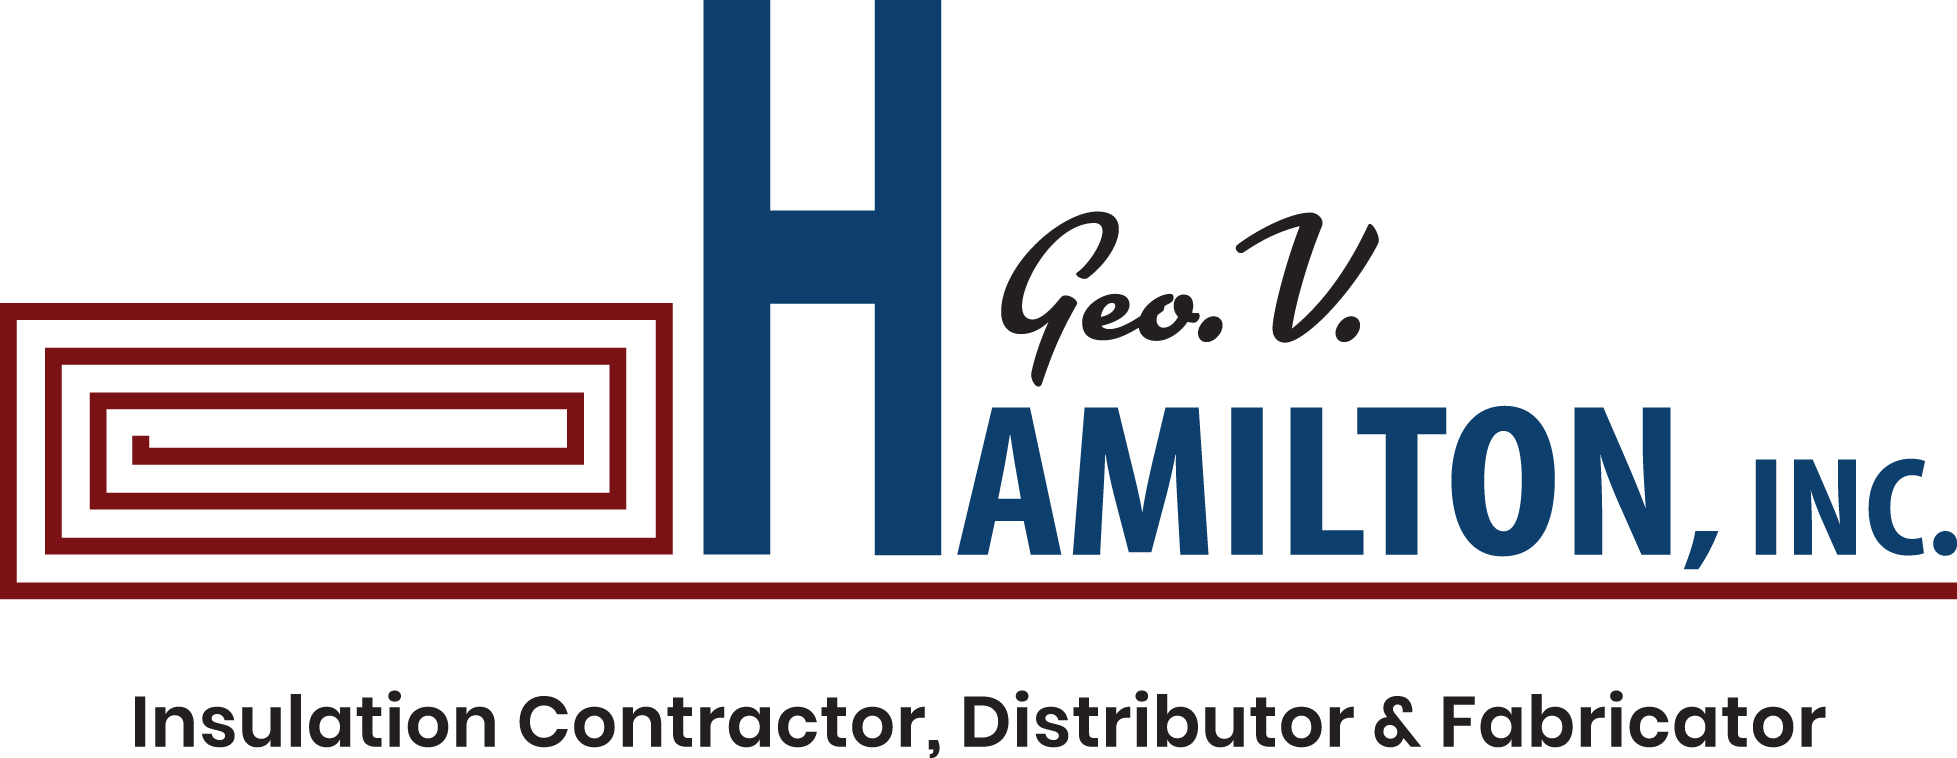 Geo V. Hamilton Inc.